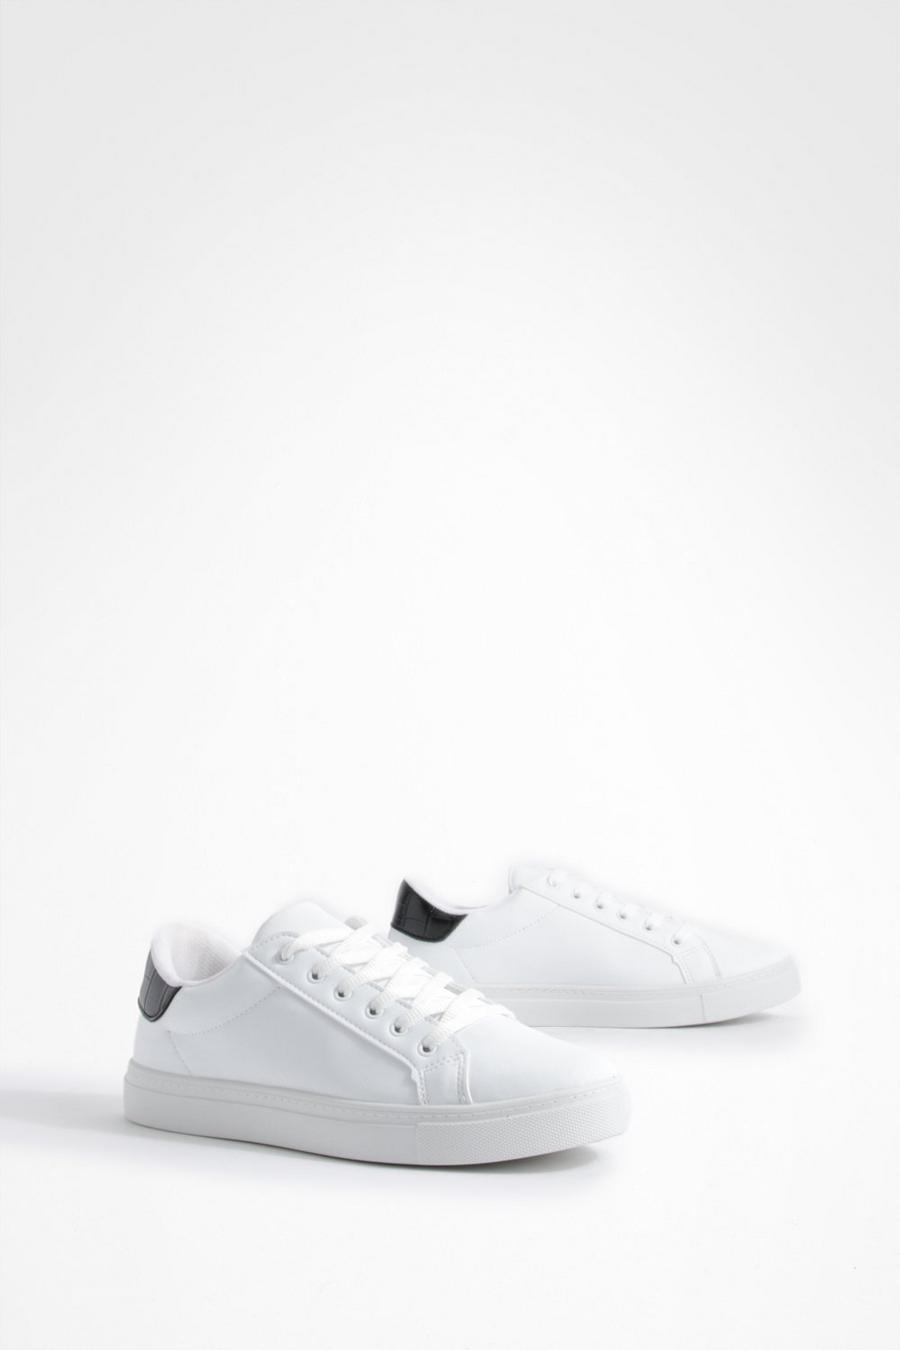 Flache Basic-Sneaker mit Kroko-Einsatz, White